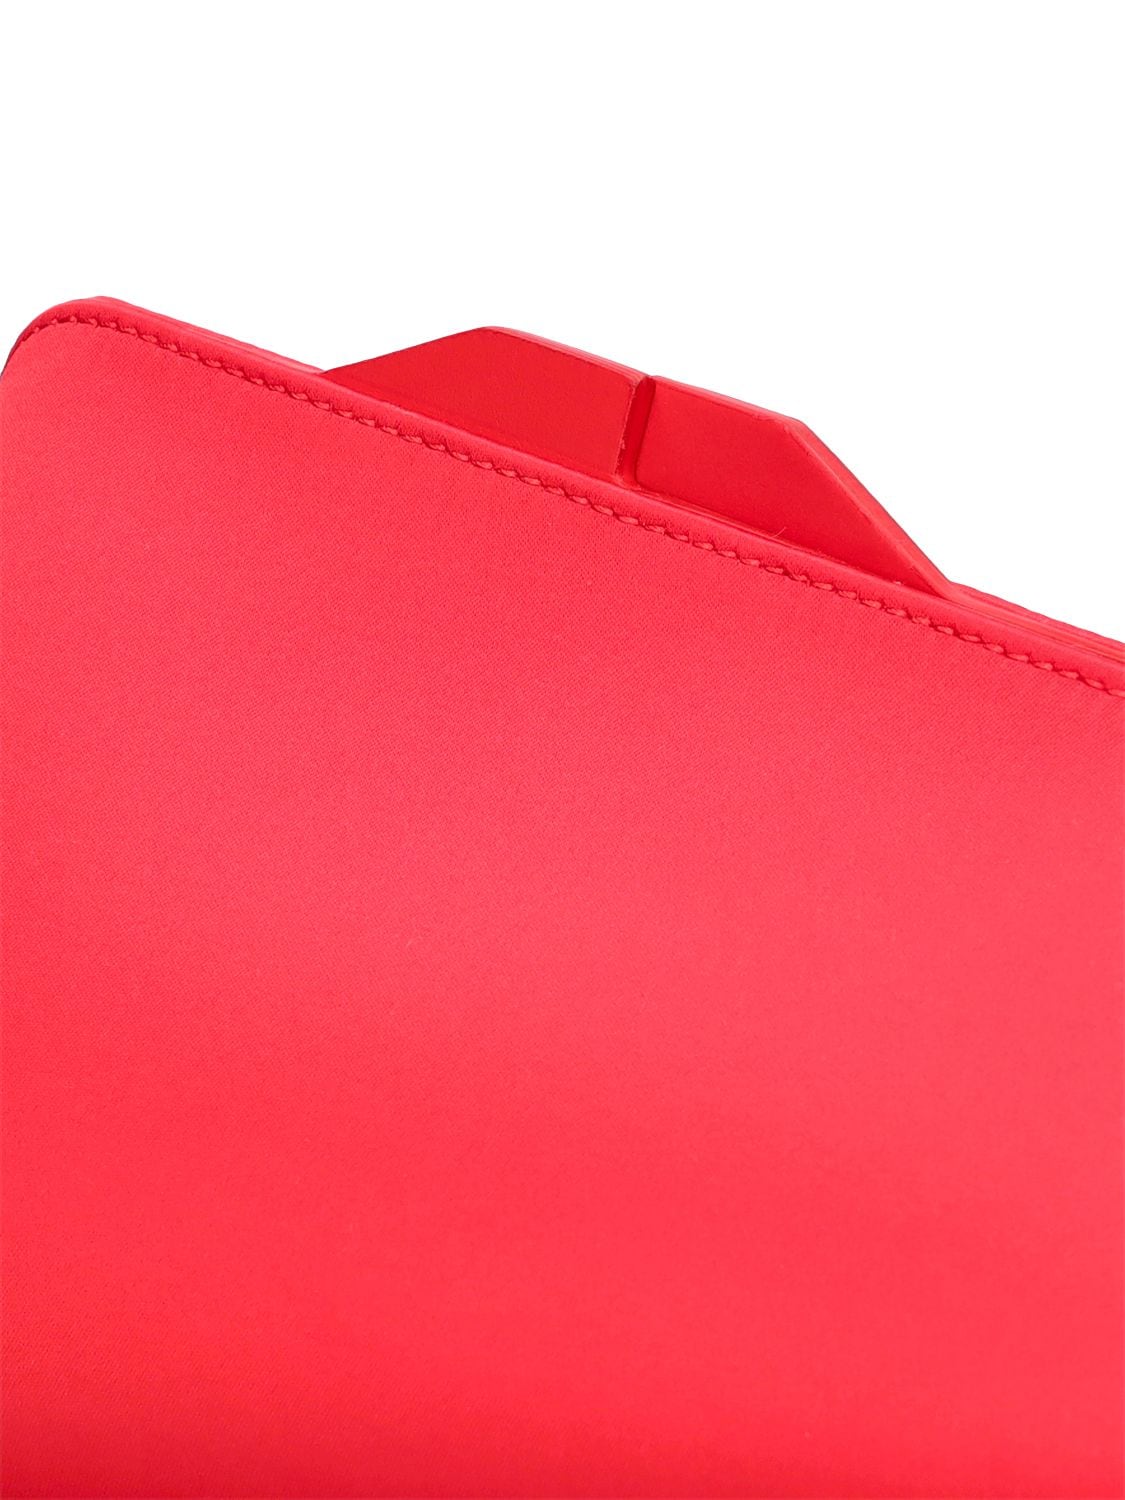 Shop Attico 8:30 Pm Satin & Leather Clutch In Red